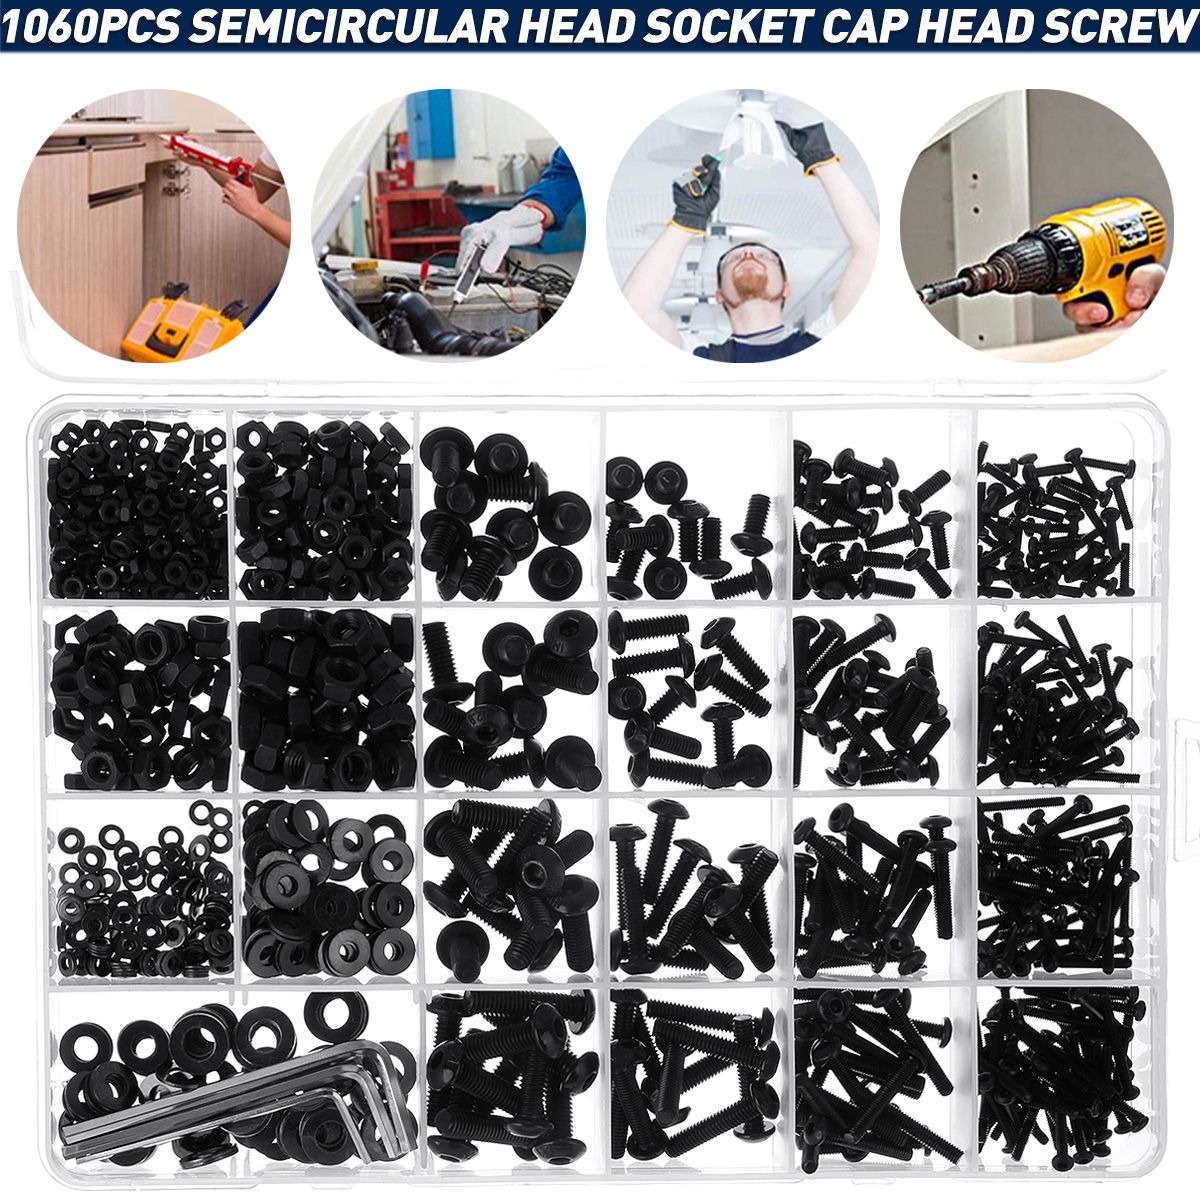 1060pcs-M2-M3-M4-M5-Hex-Socket-Screw-Set-Carbon-Steel-Semicircular-Head-Screws-1761633